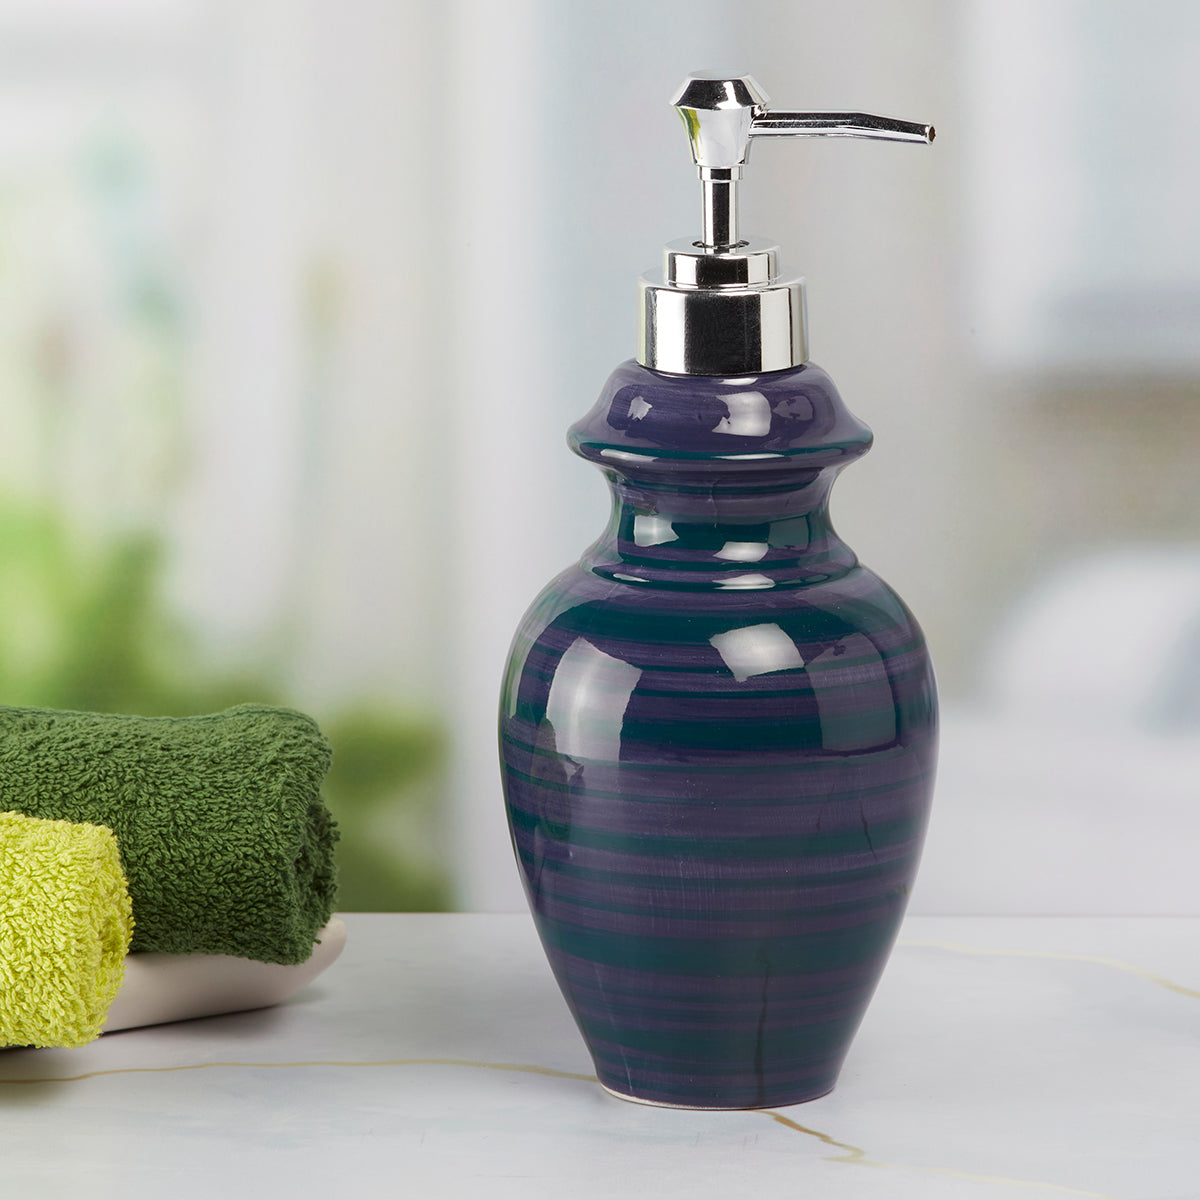 Ceramic Soap Dispenser handwash Pump for Bathroom, Set of 1, Blue (7639)